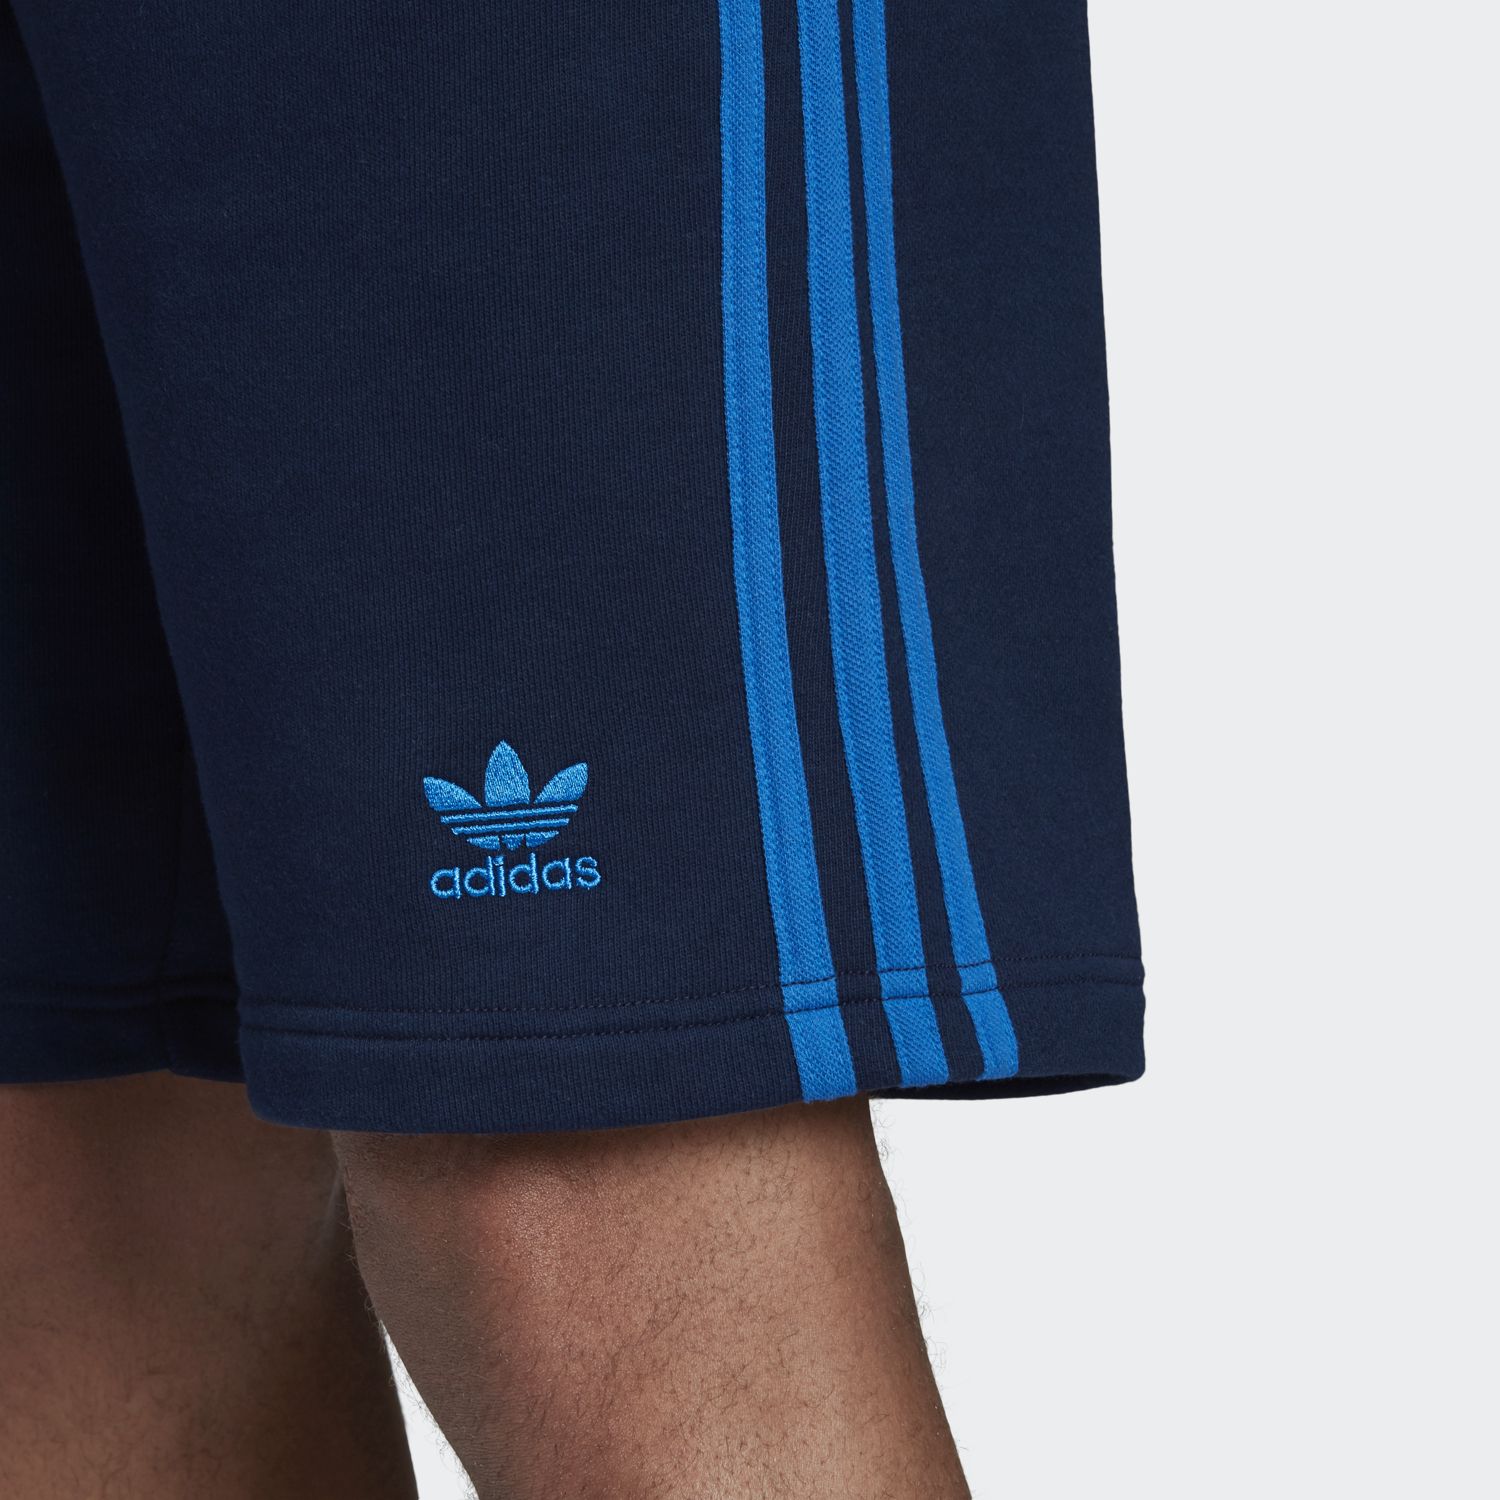 Adidas 3-Stripes Shorts - Men